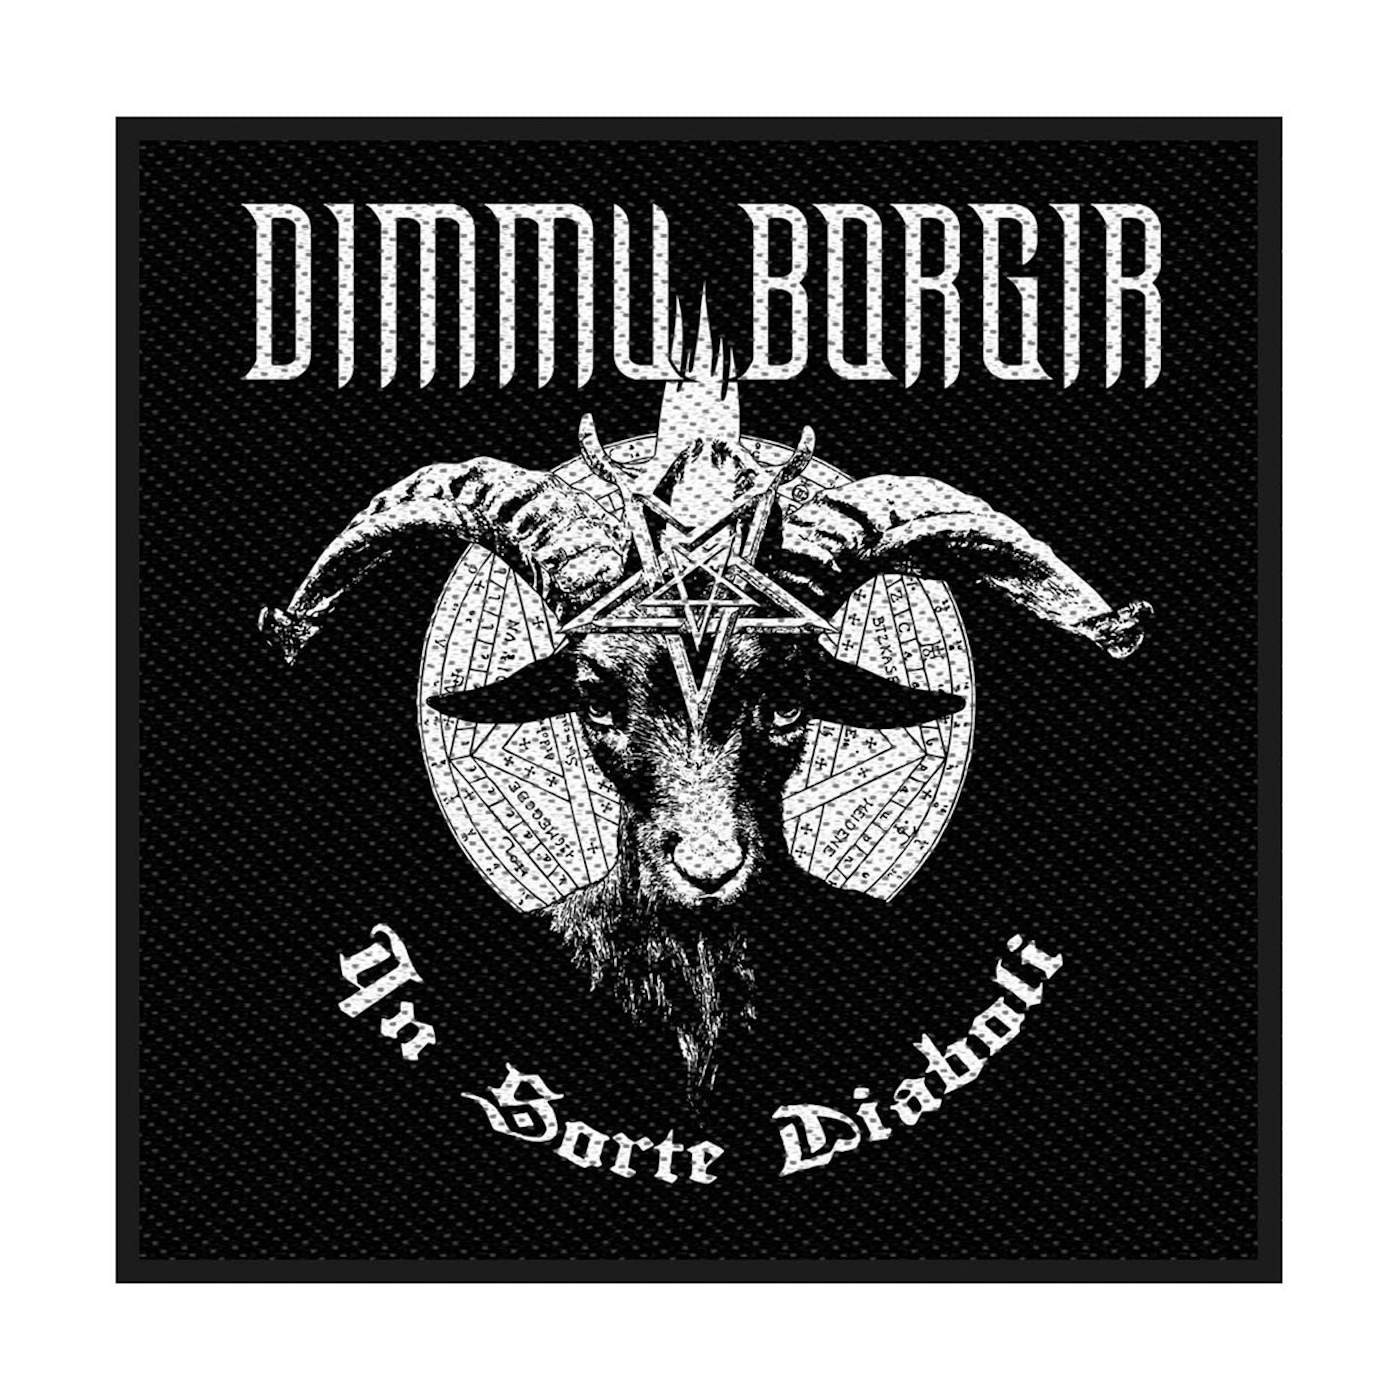 Dimmu Borgir Sew-On Patch - In Sorte Diaboli (Packaged)